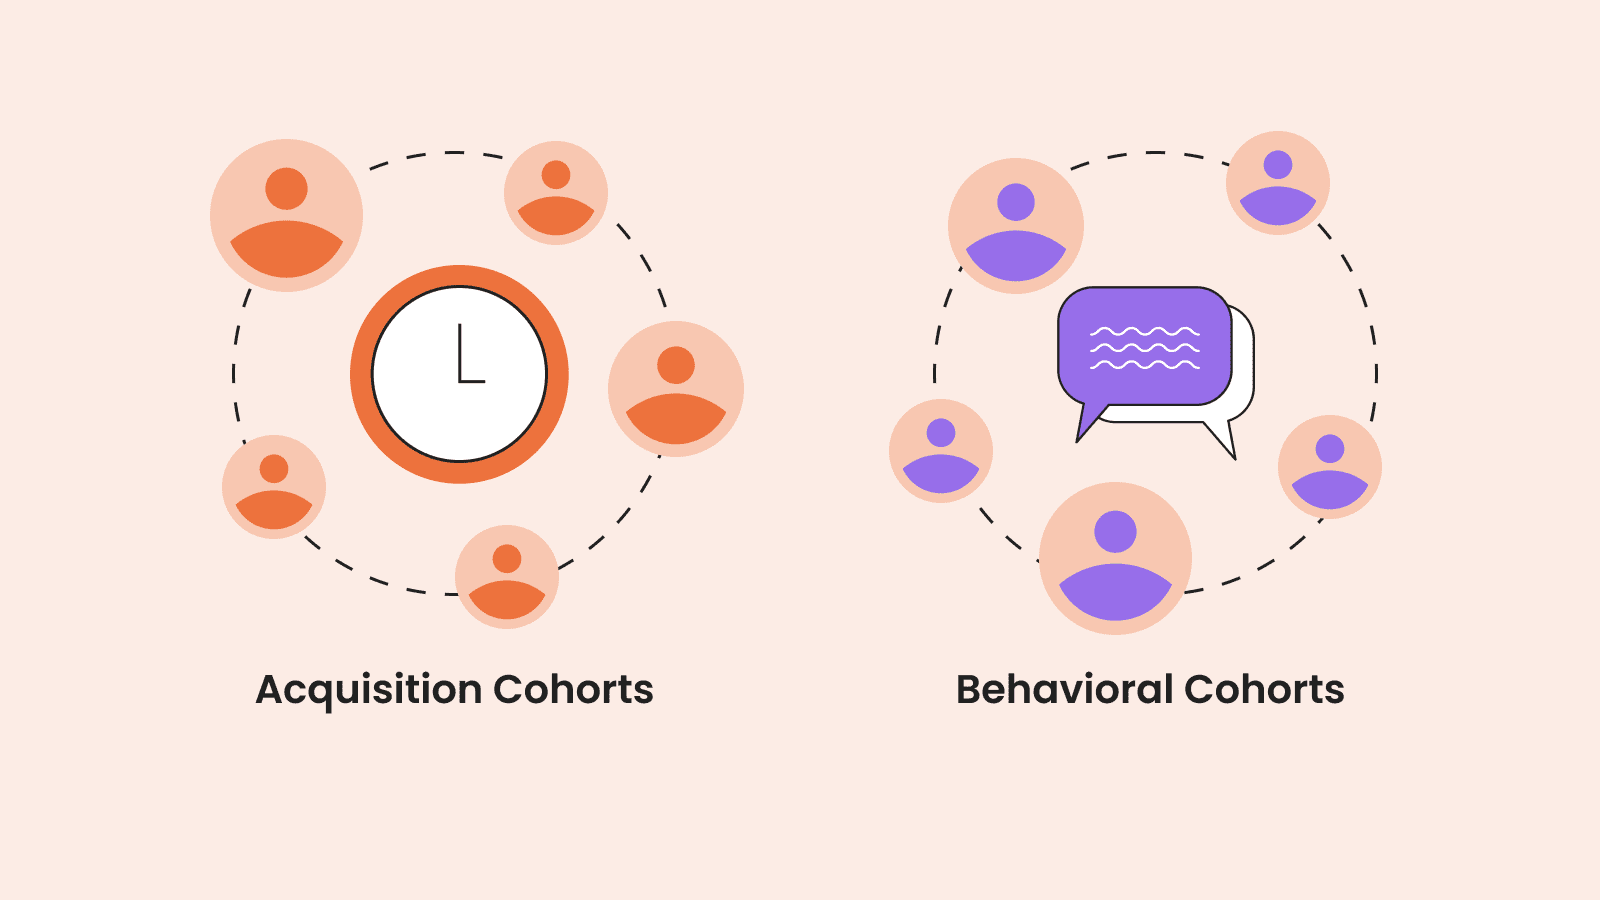 Acquisition Cohorts and Behavioral Cohorts